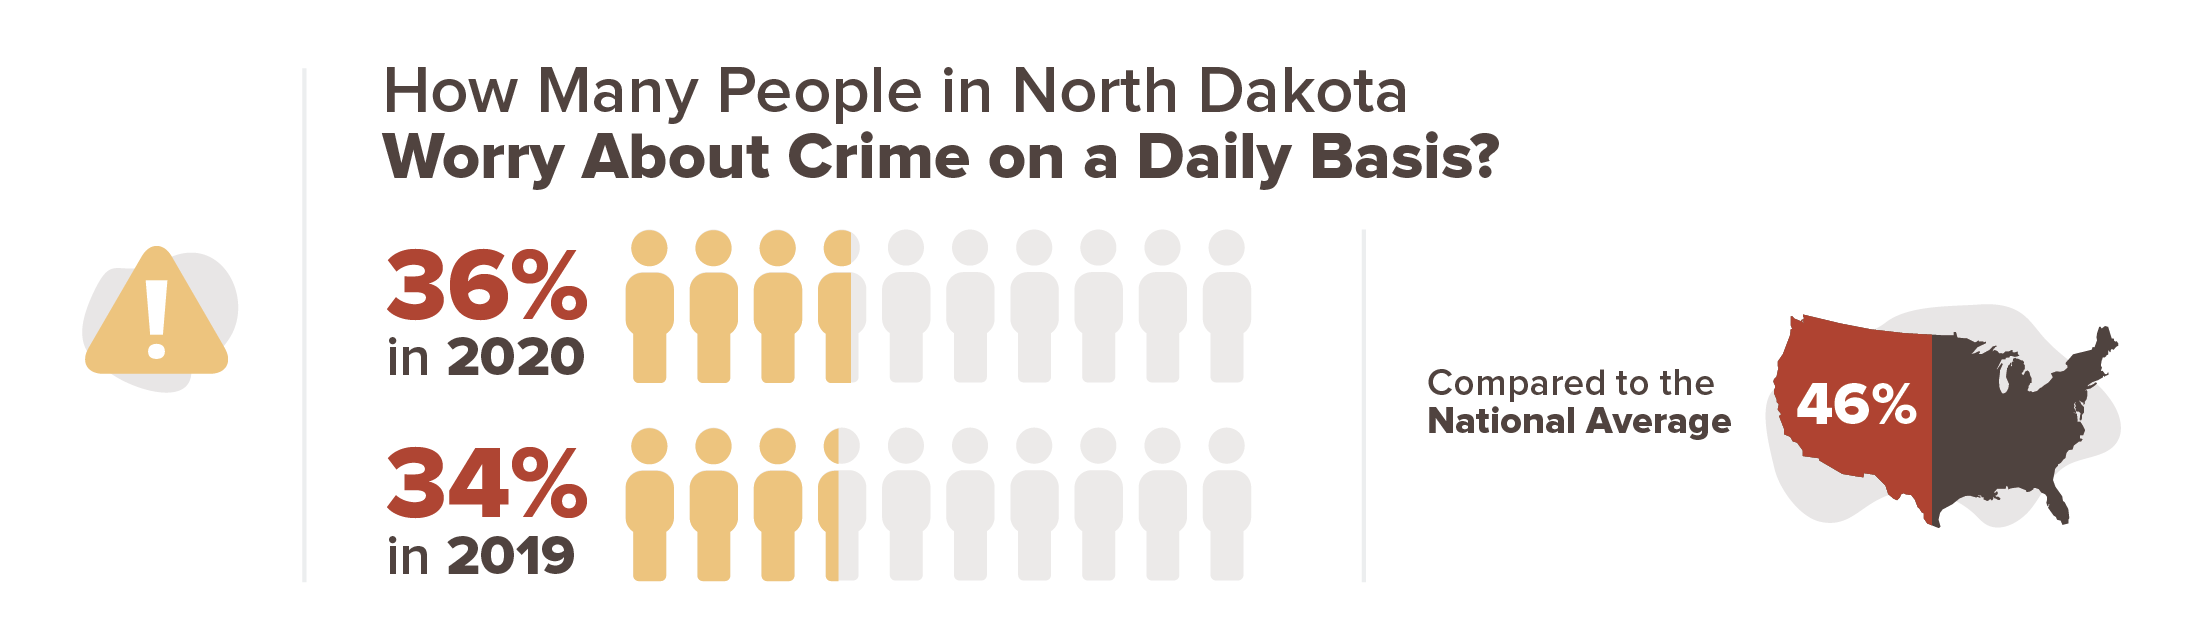 North Dakota crime stats infographic